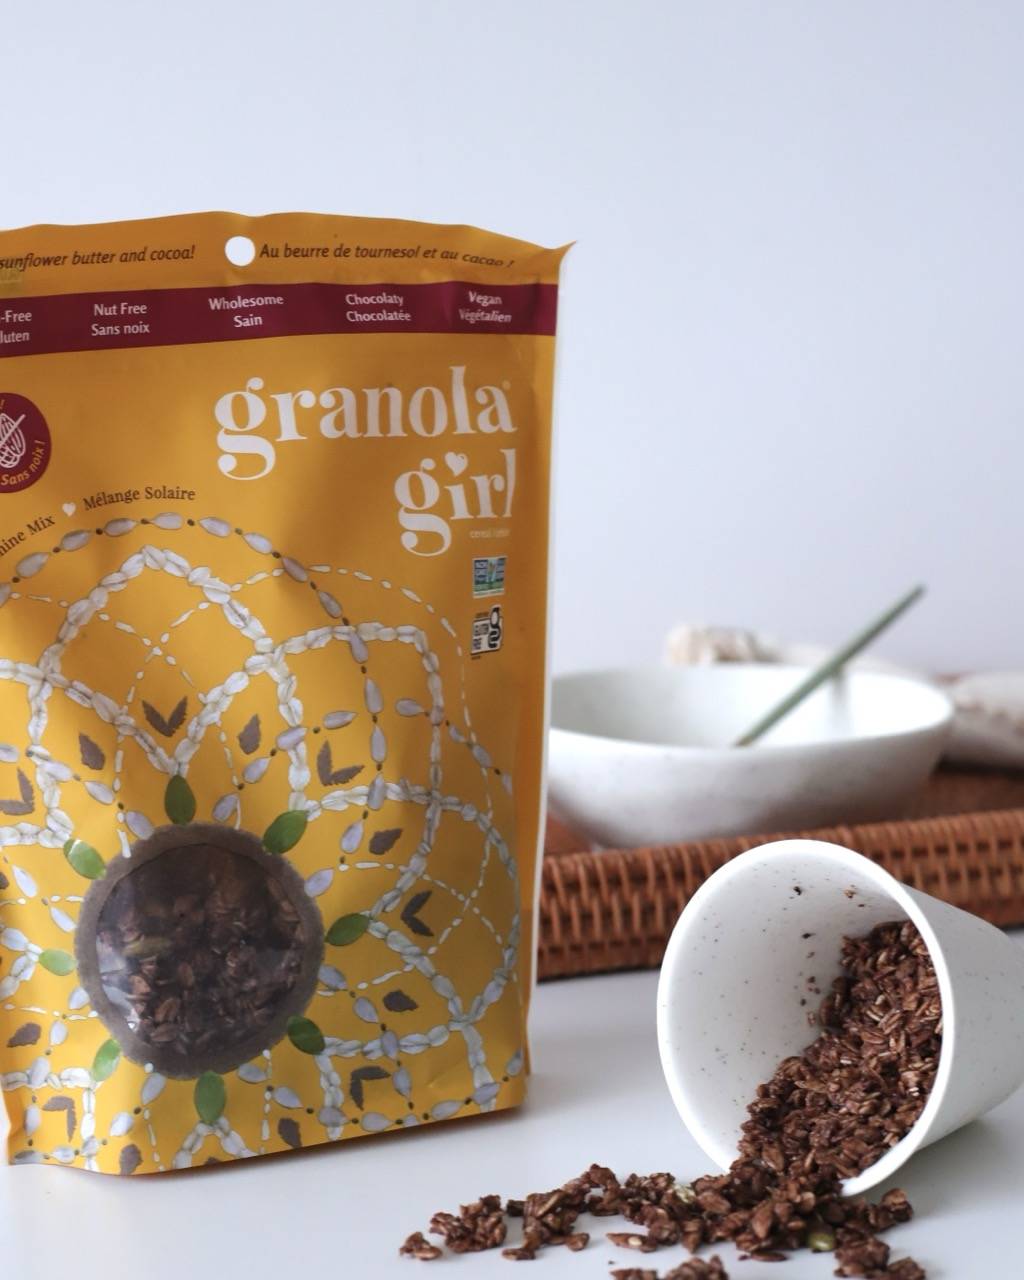 Granola chocolat granola girl